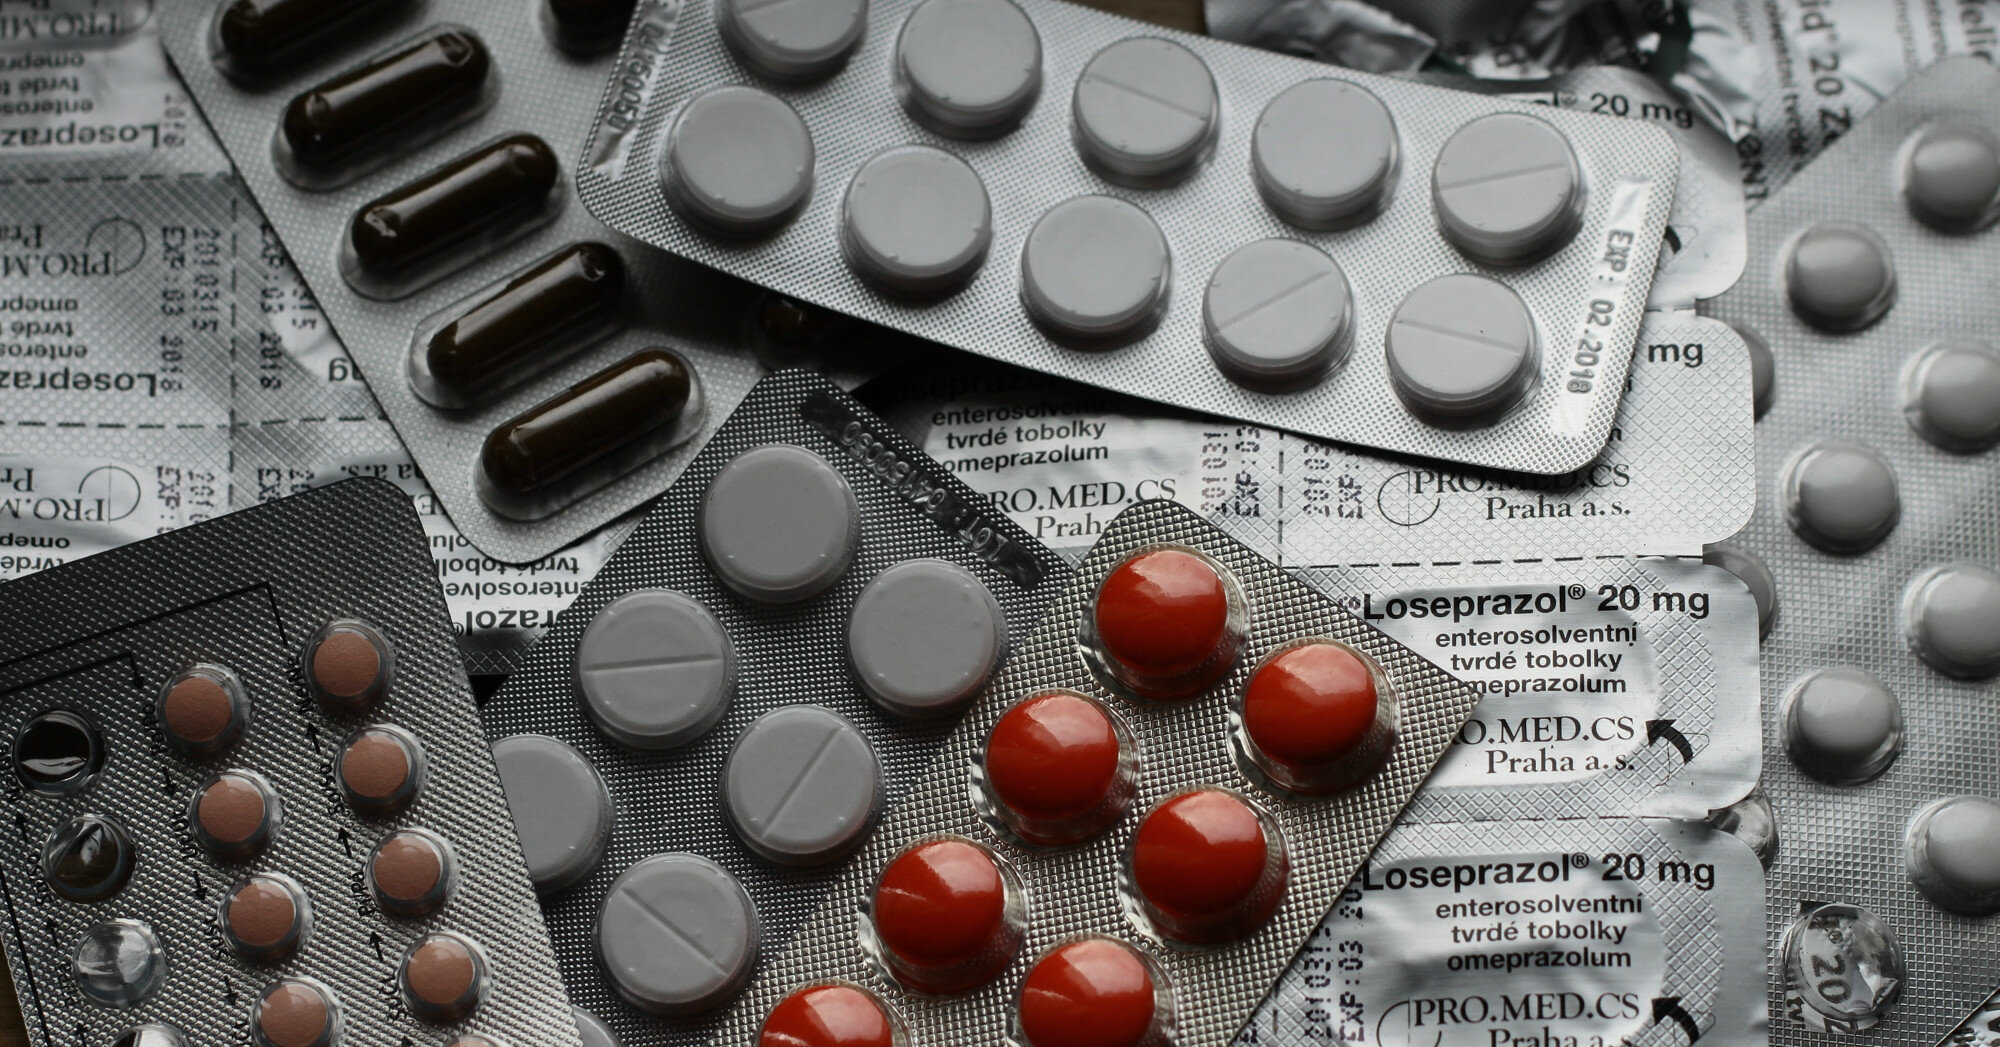 Аптеки обвиняют в многократном завышении цен на лекарства